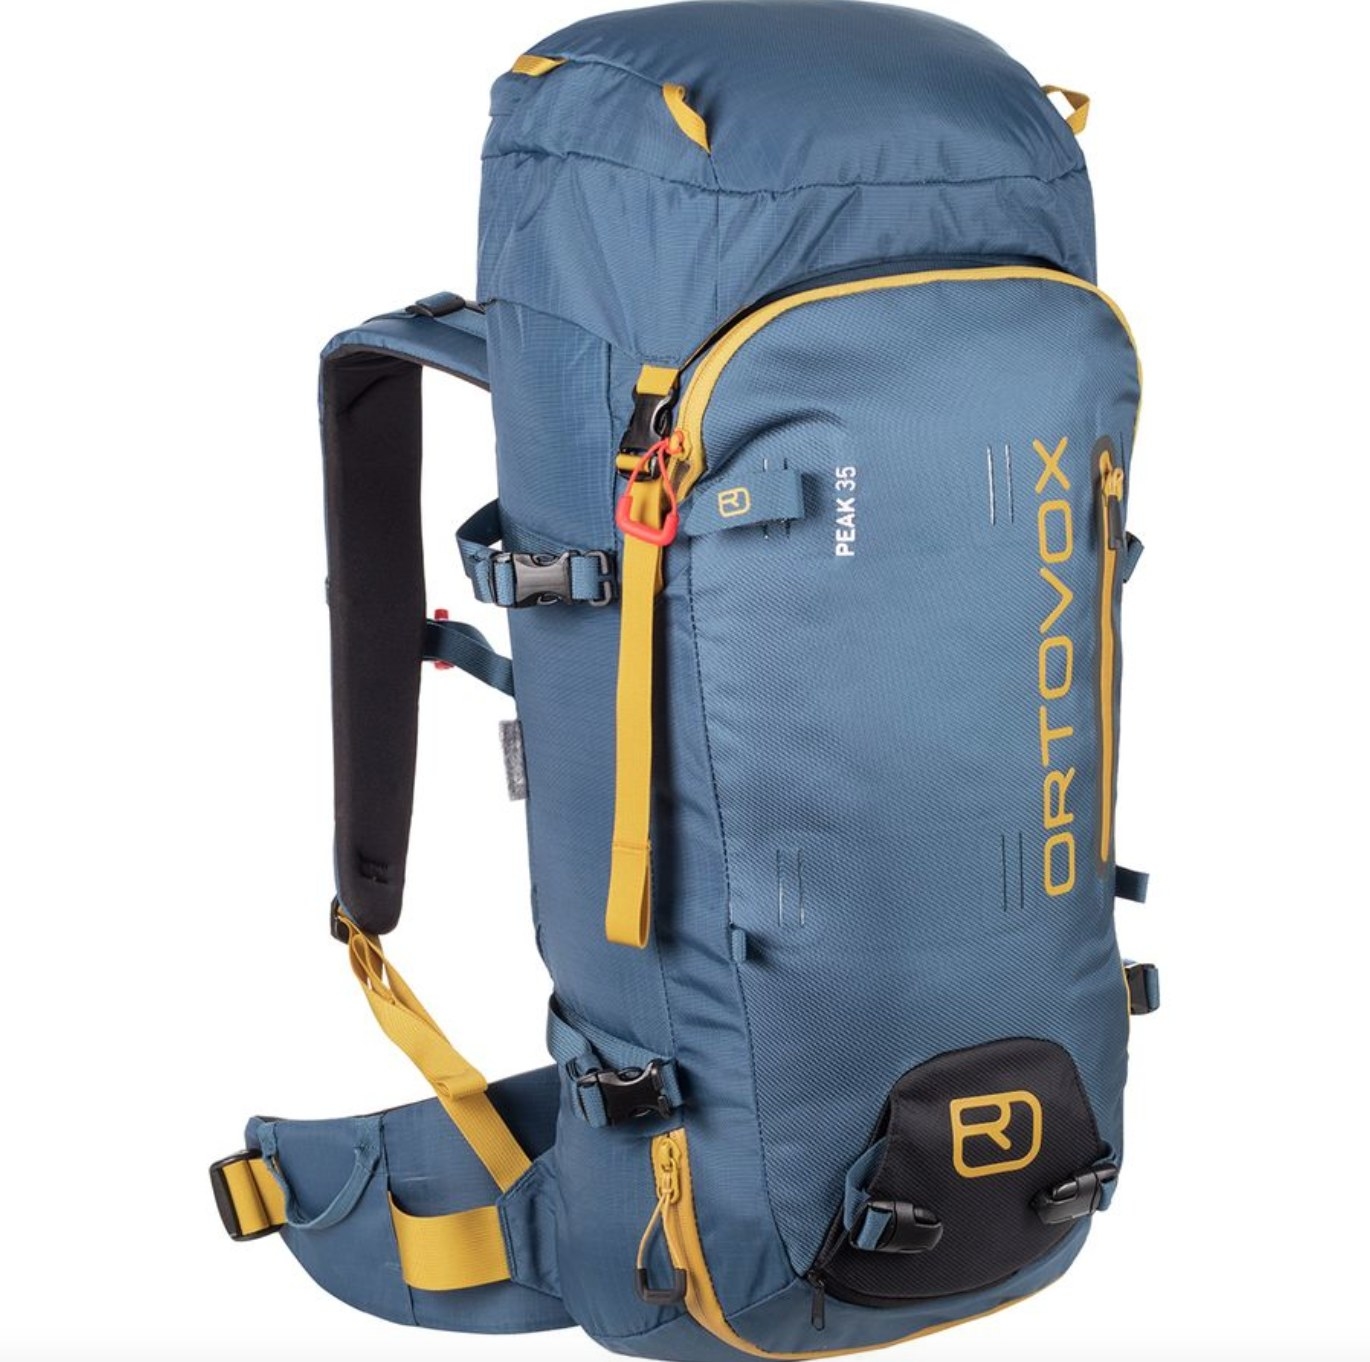 Ortovox Peak backpack in night blue